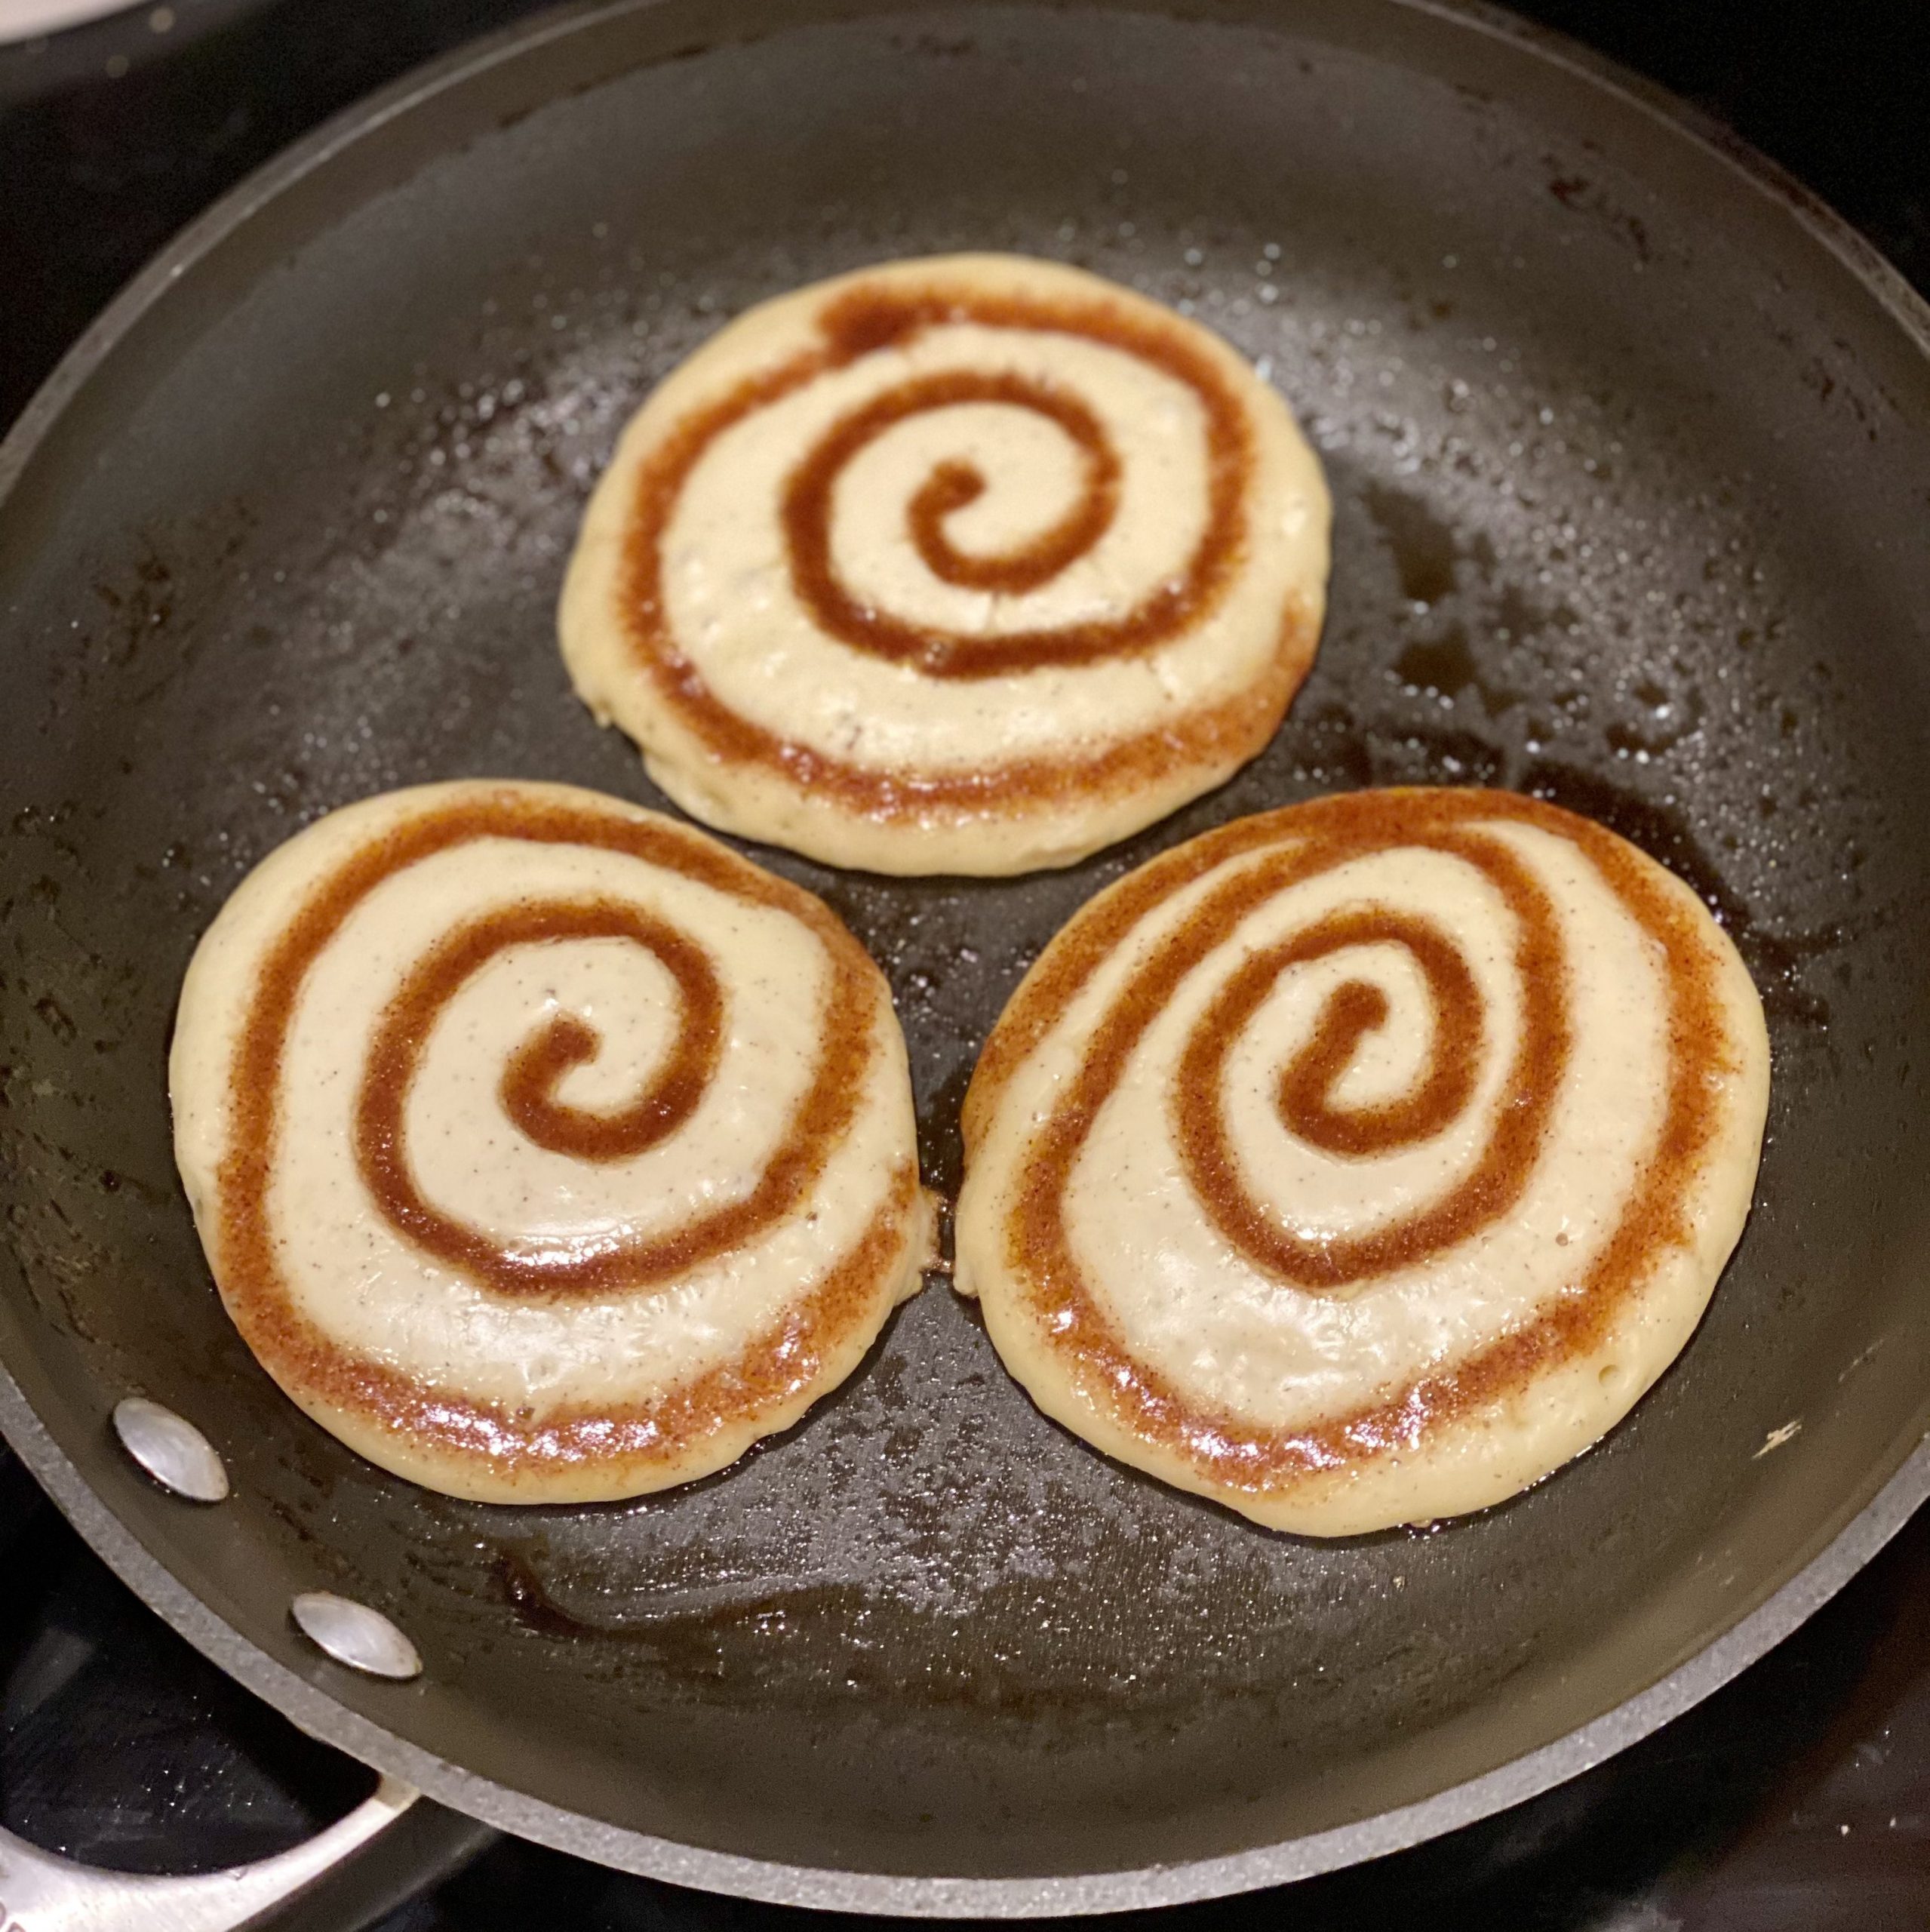 cinnamon swirl greek yogurt pancakes